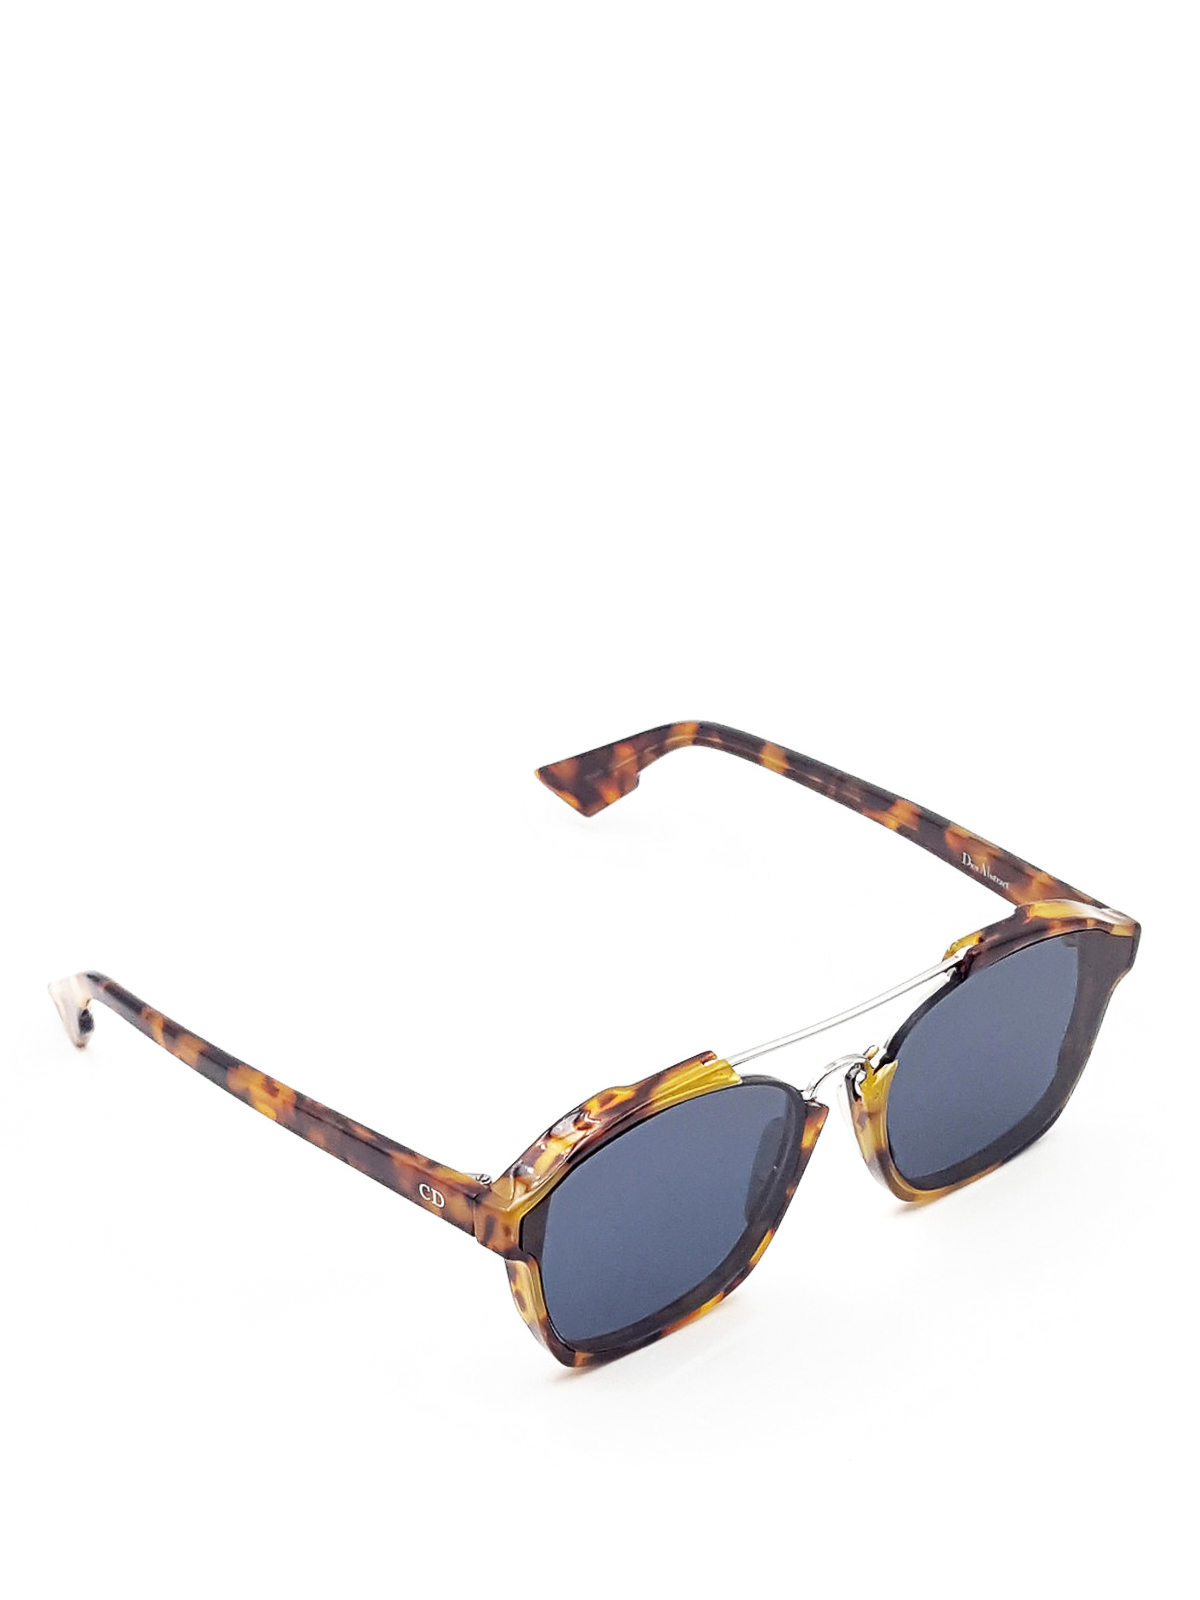 Sunglasses Dior - Abstract havana sunglasses - ABSTRACTYHAA9 | iKRIX.com